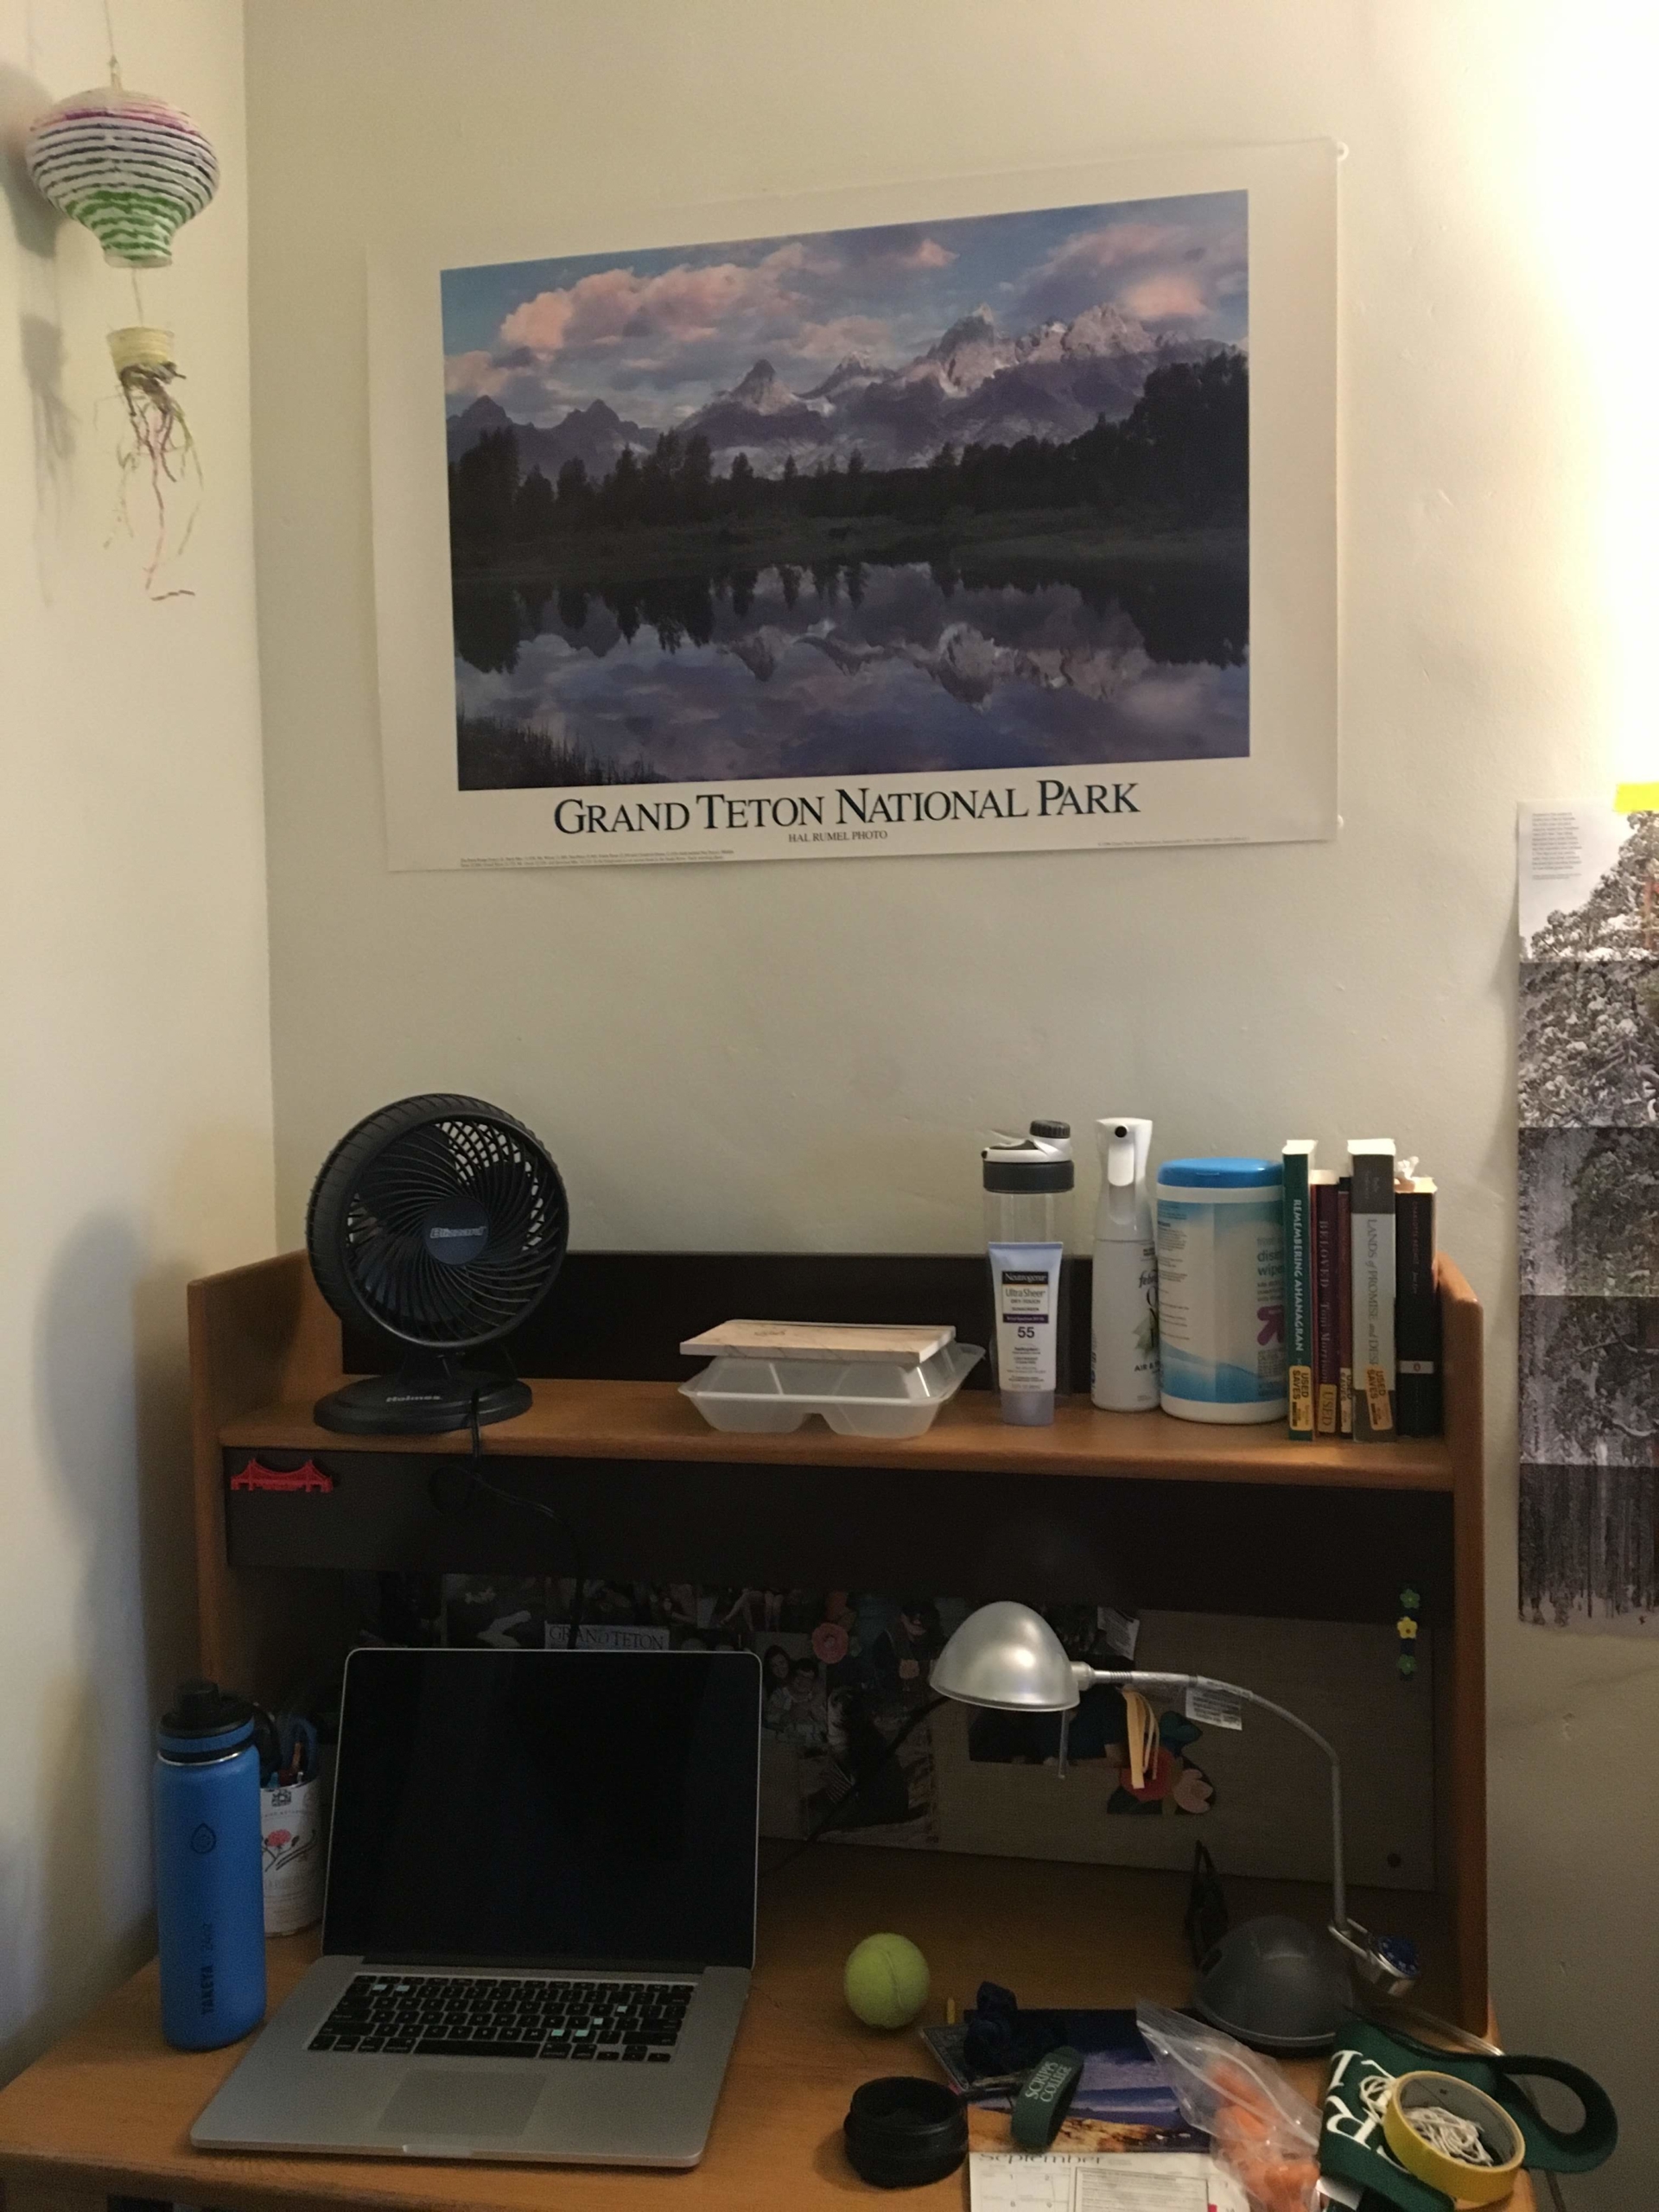 Image of Siena's desk with landscape poster above